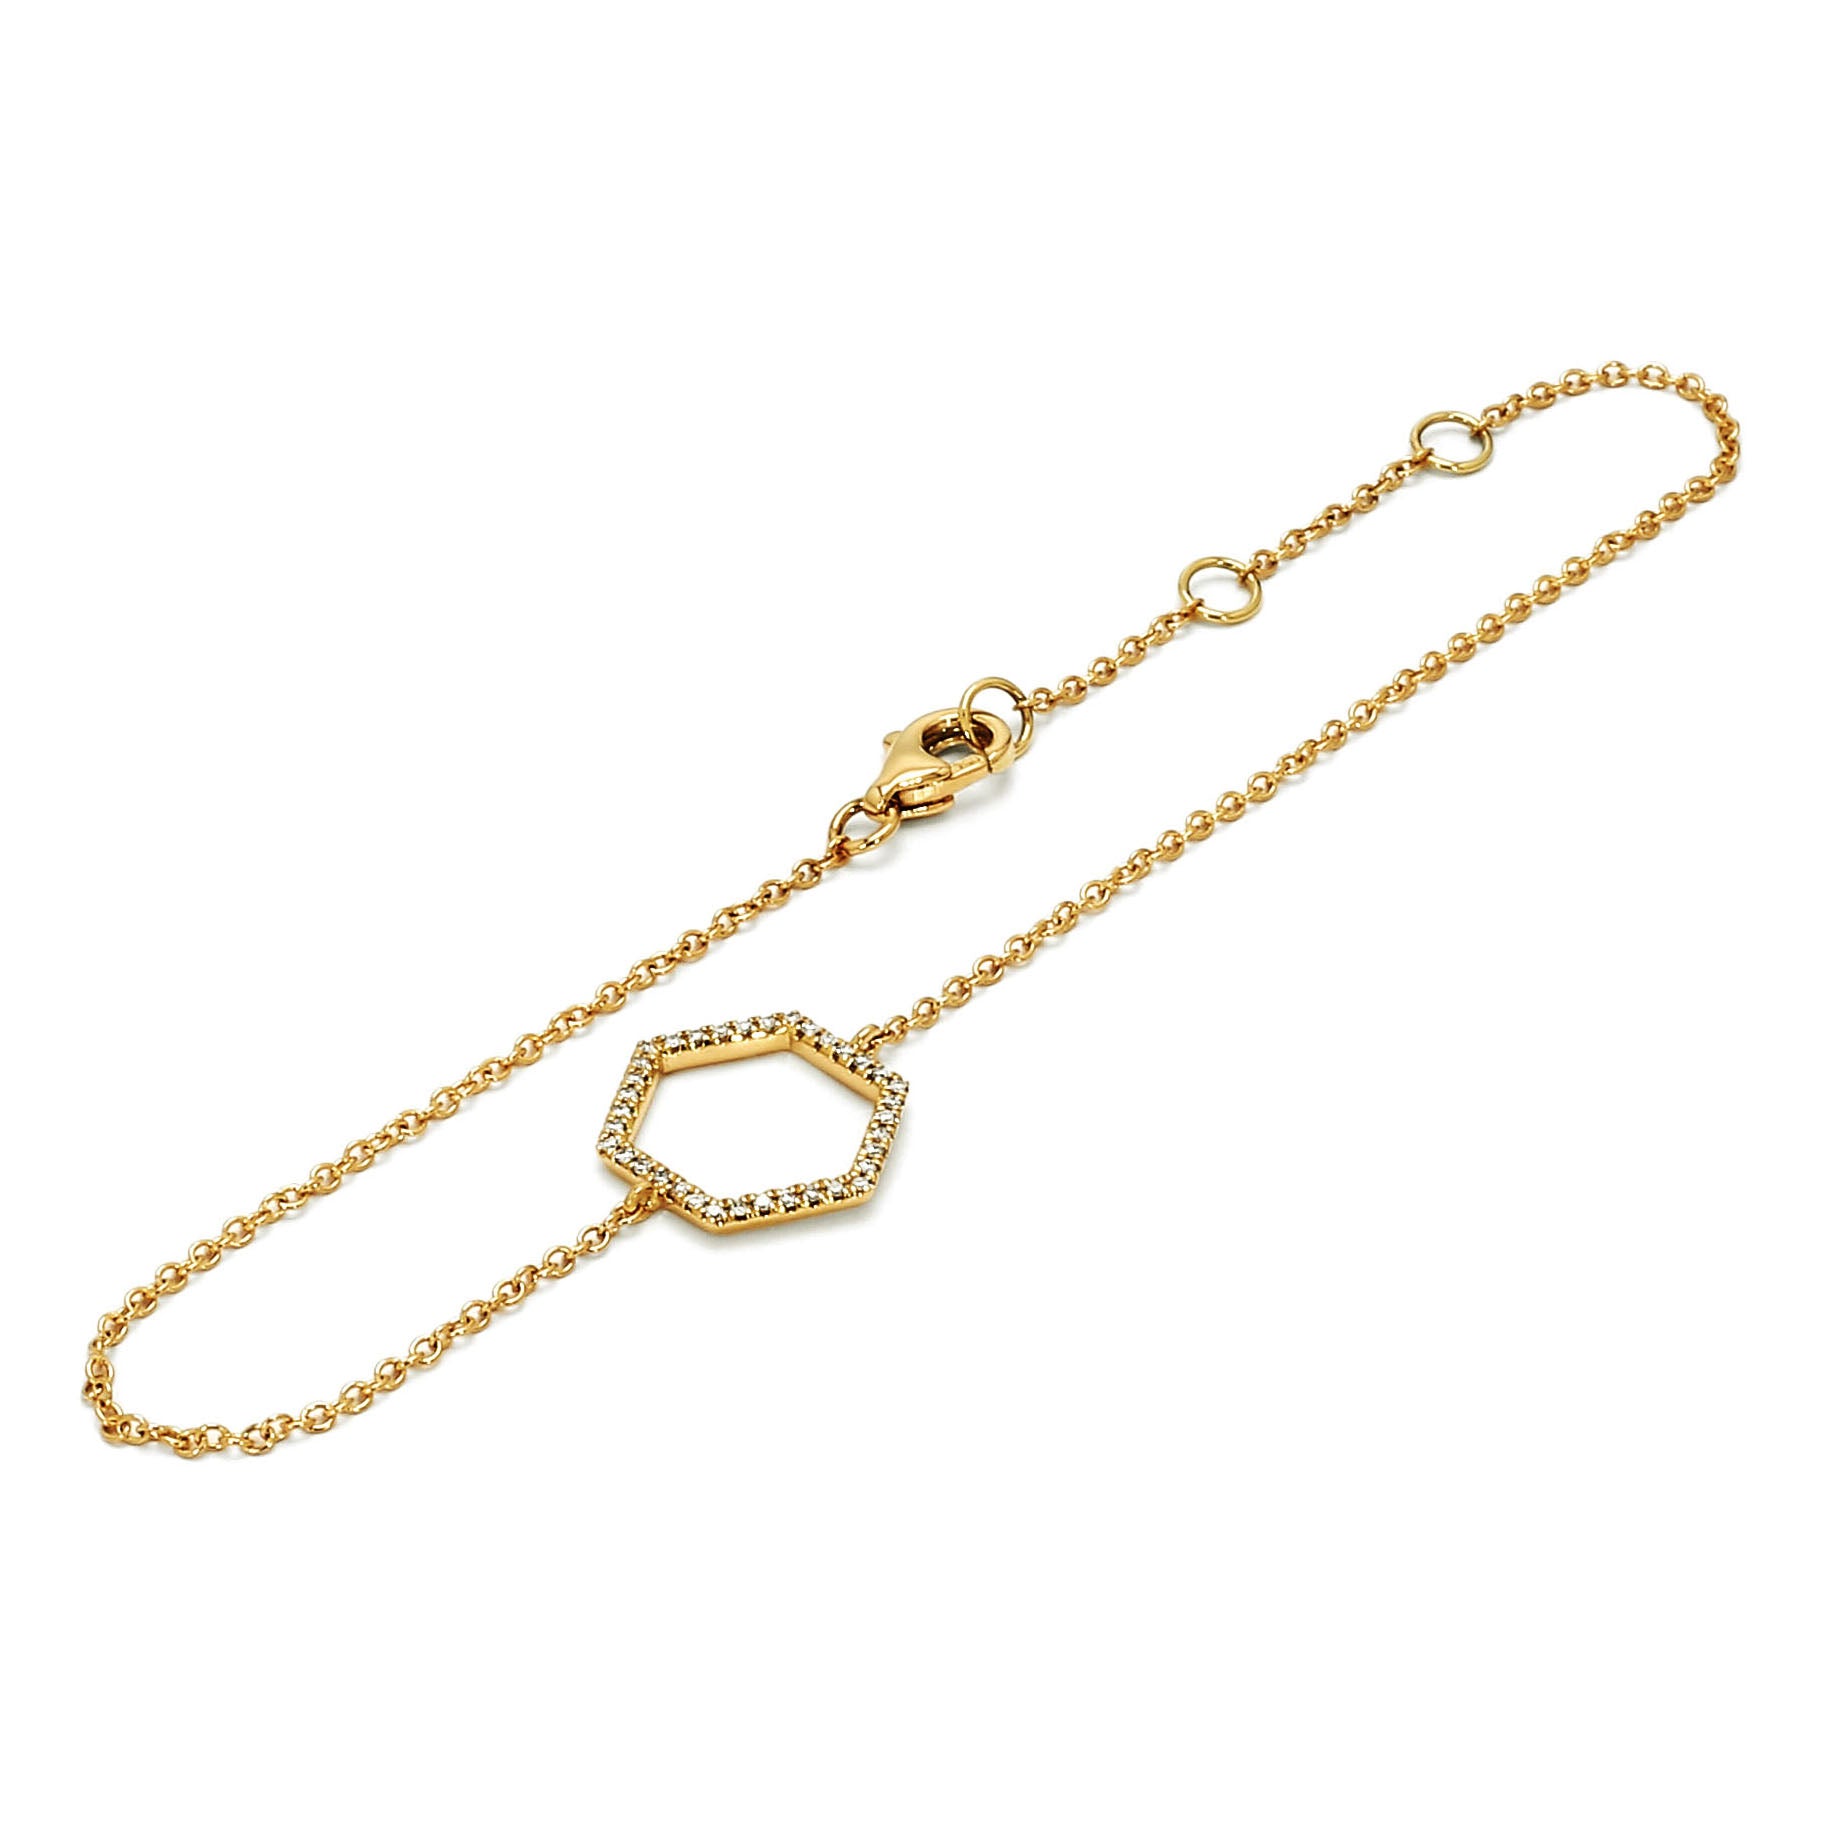 Adamar Jewels LUZ Nube Bracelet in 18K yellow gold set with diamonds